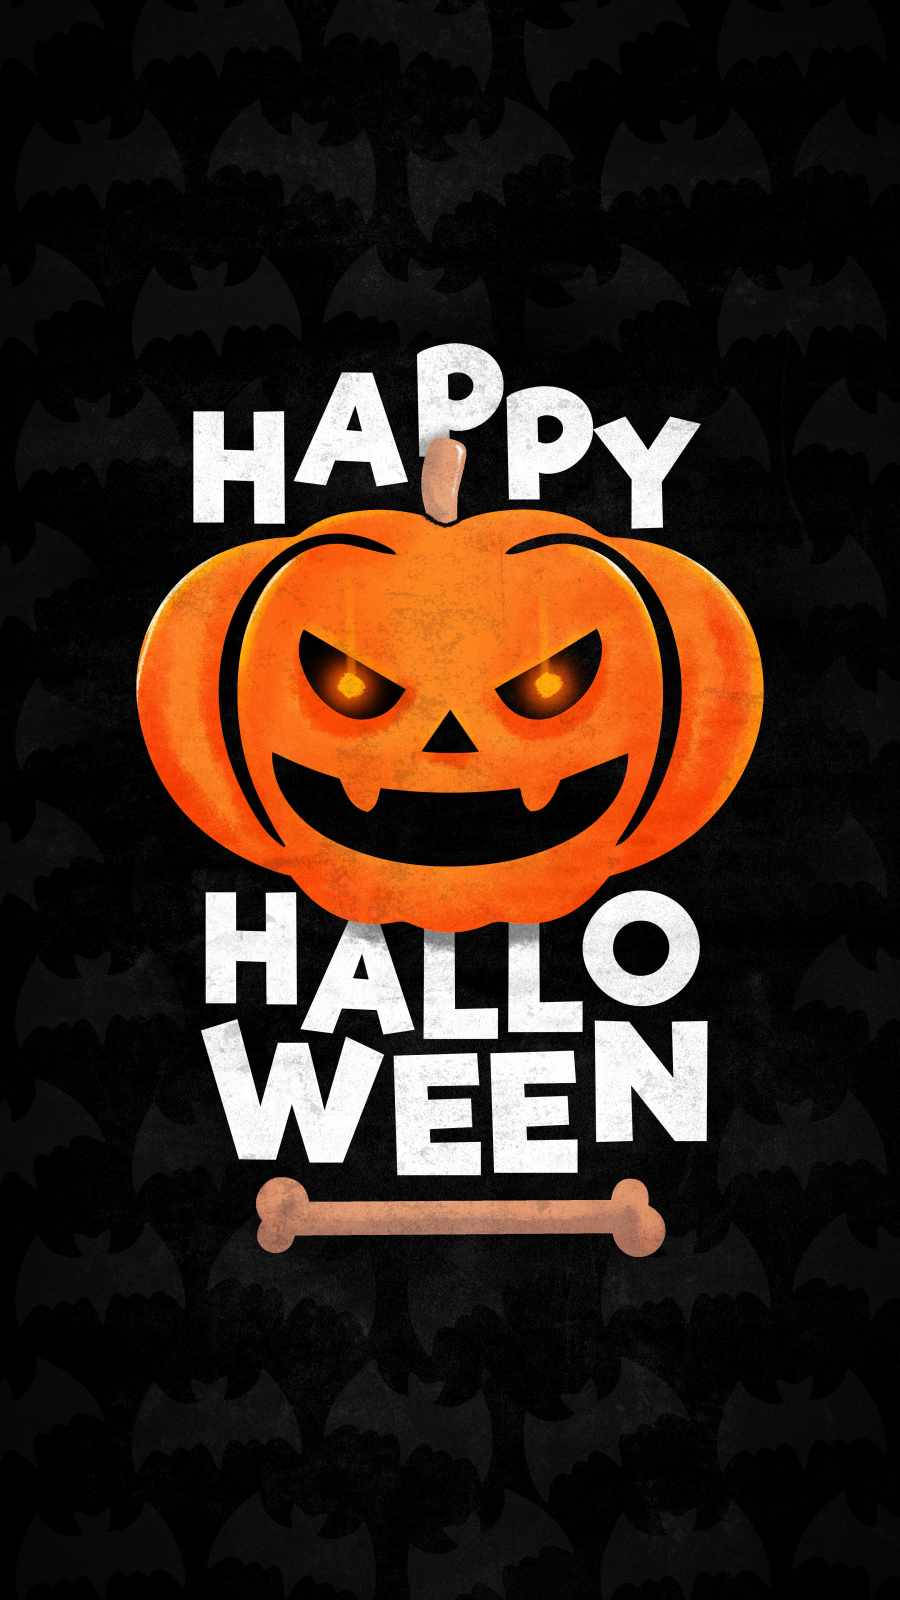 Wishing You A Spook-tastic Happy Halloween!